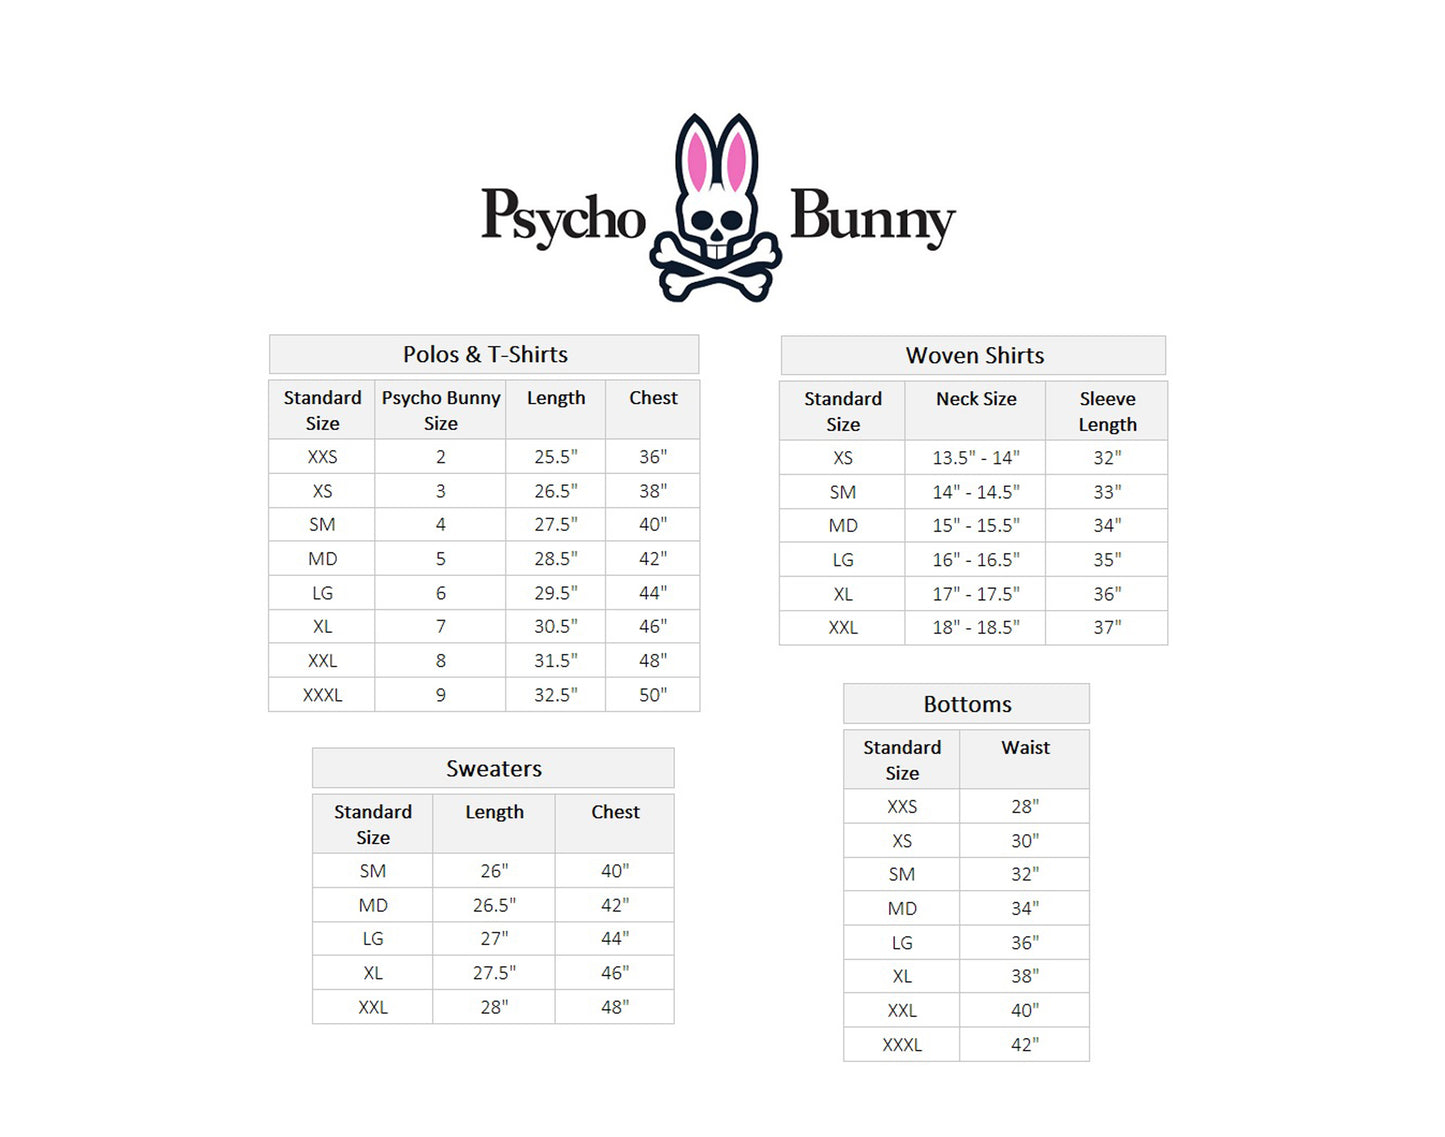 Psycho Bunny Classic V-Neck Heather Grey Men's Tee Shirt B6U100ARPC-HGY